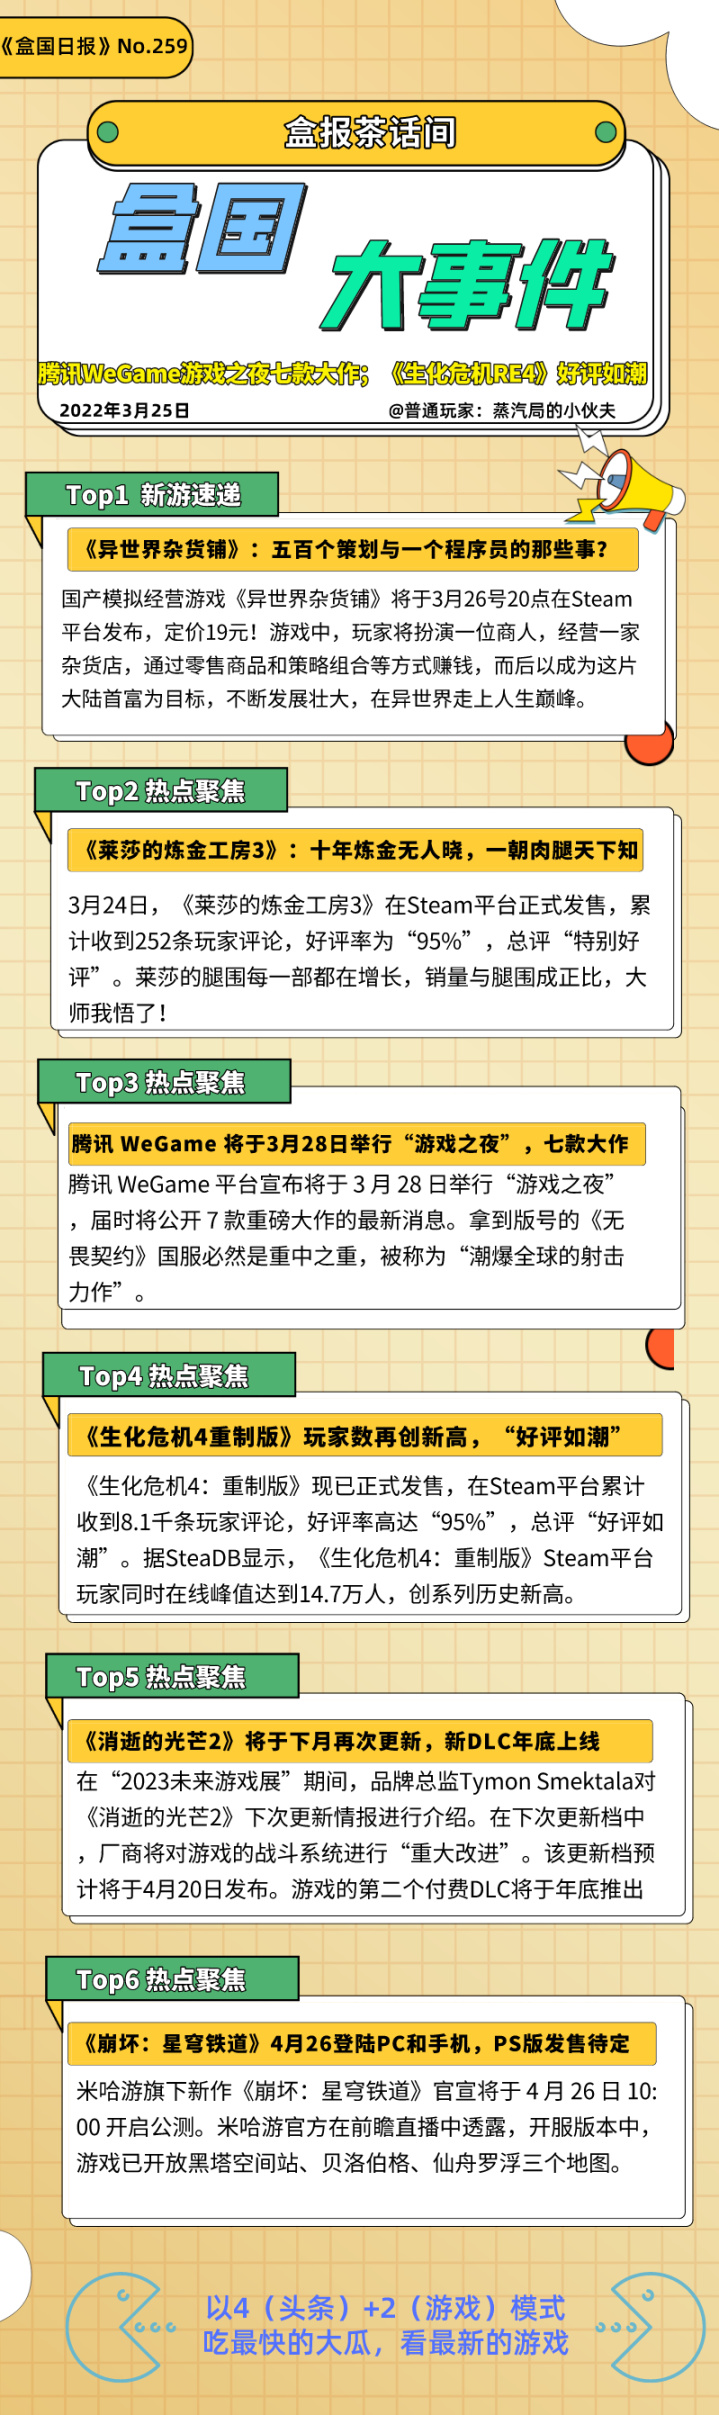 【PC遊戲】盒國日報|騰訊WeGame遊戲之夜七款大作；《生化危機RE4》好評如潮